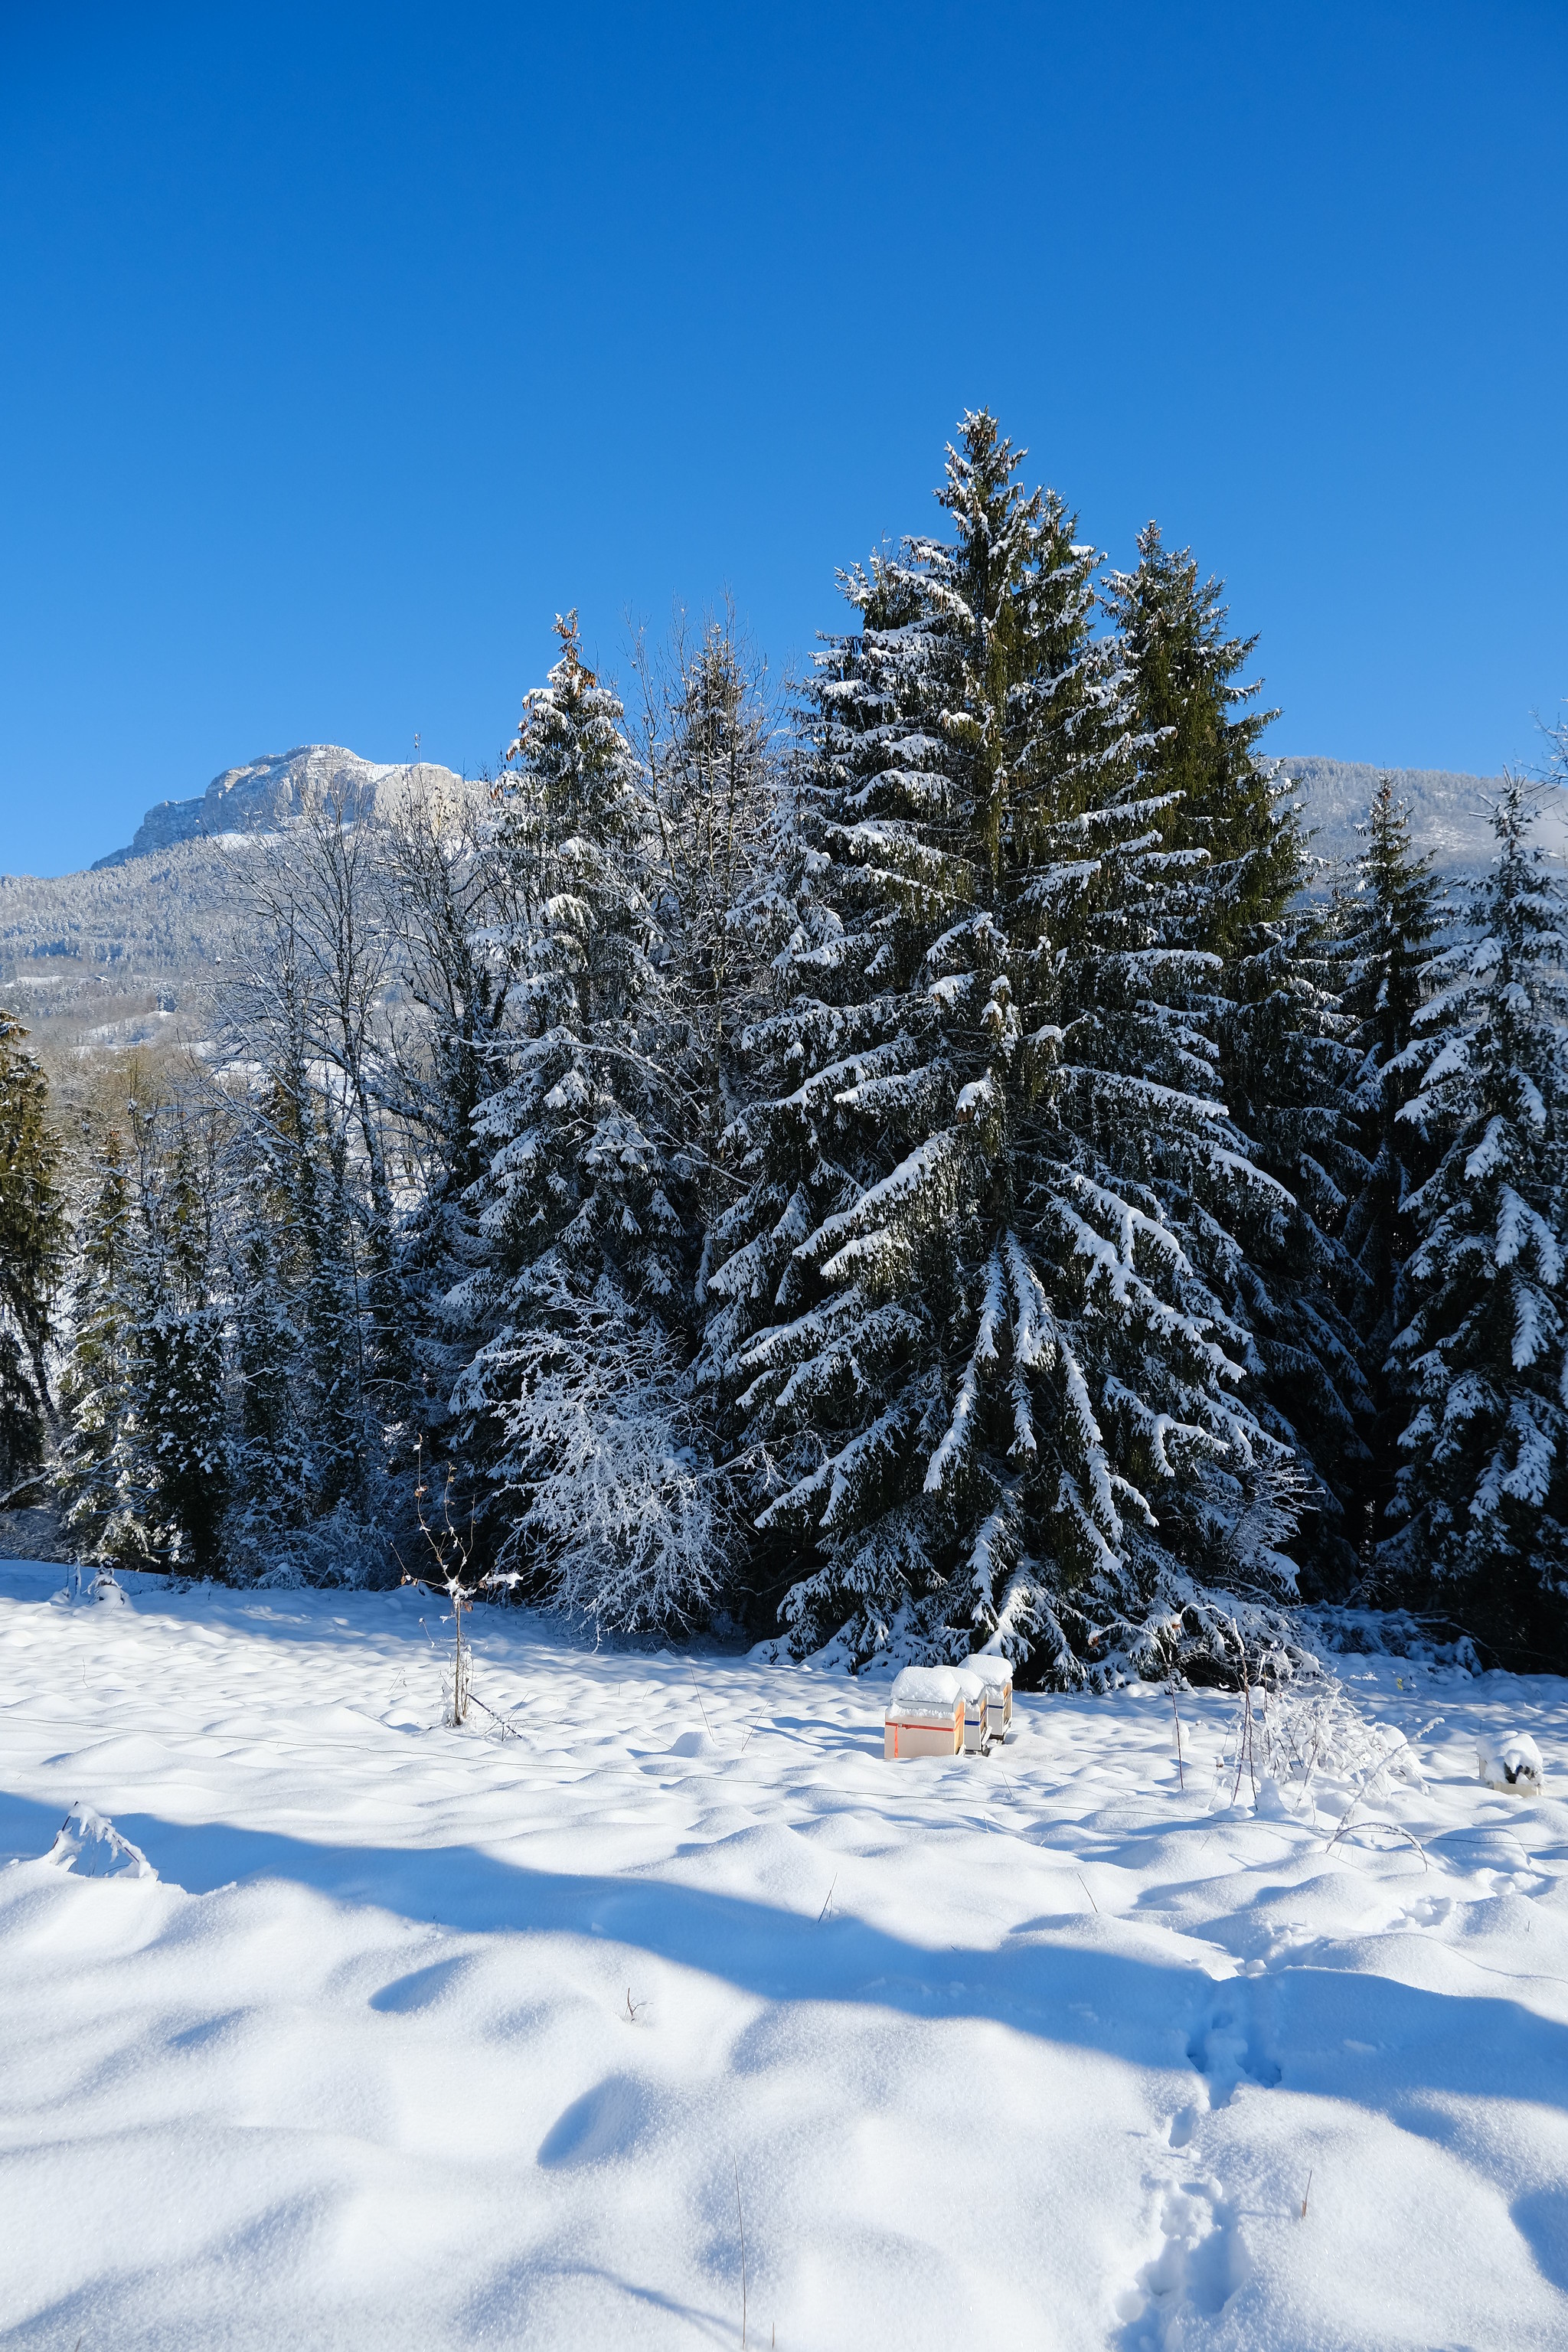 114049 descargar imagen paisaje, invierno, naturaleza, árboles, nieve, abetos, montaña: fondos de pantalla y protectores de pantalla gratis